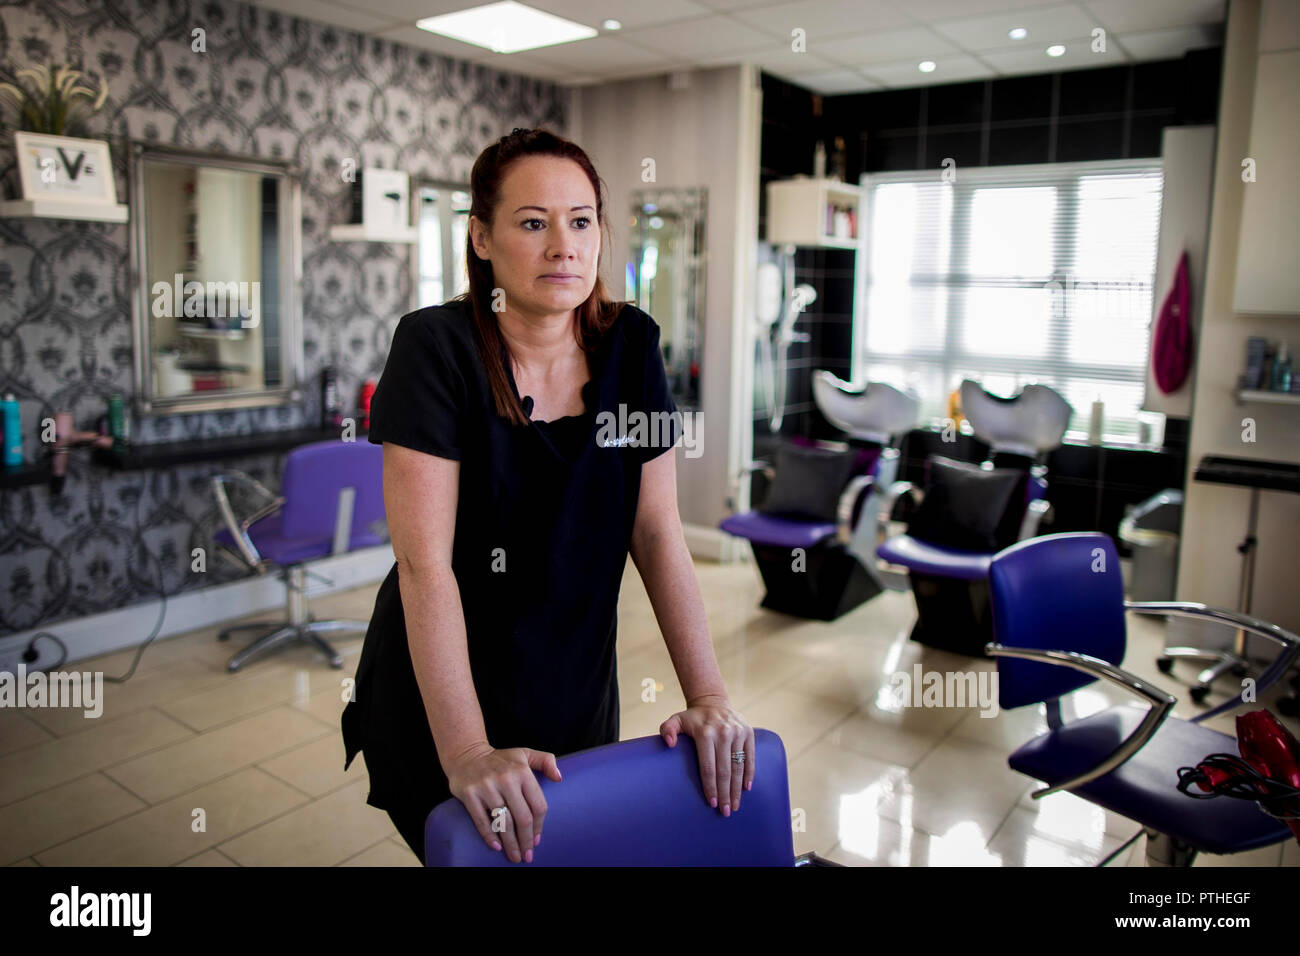 Karen Murtugh Owner And Hairdresser At K Styles Hair Salon In